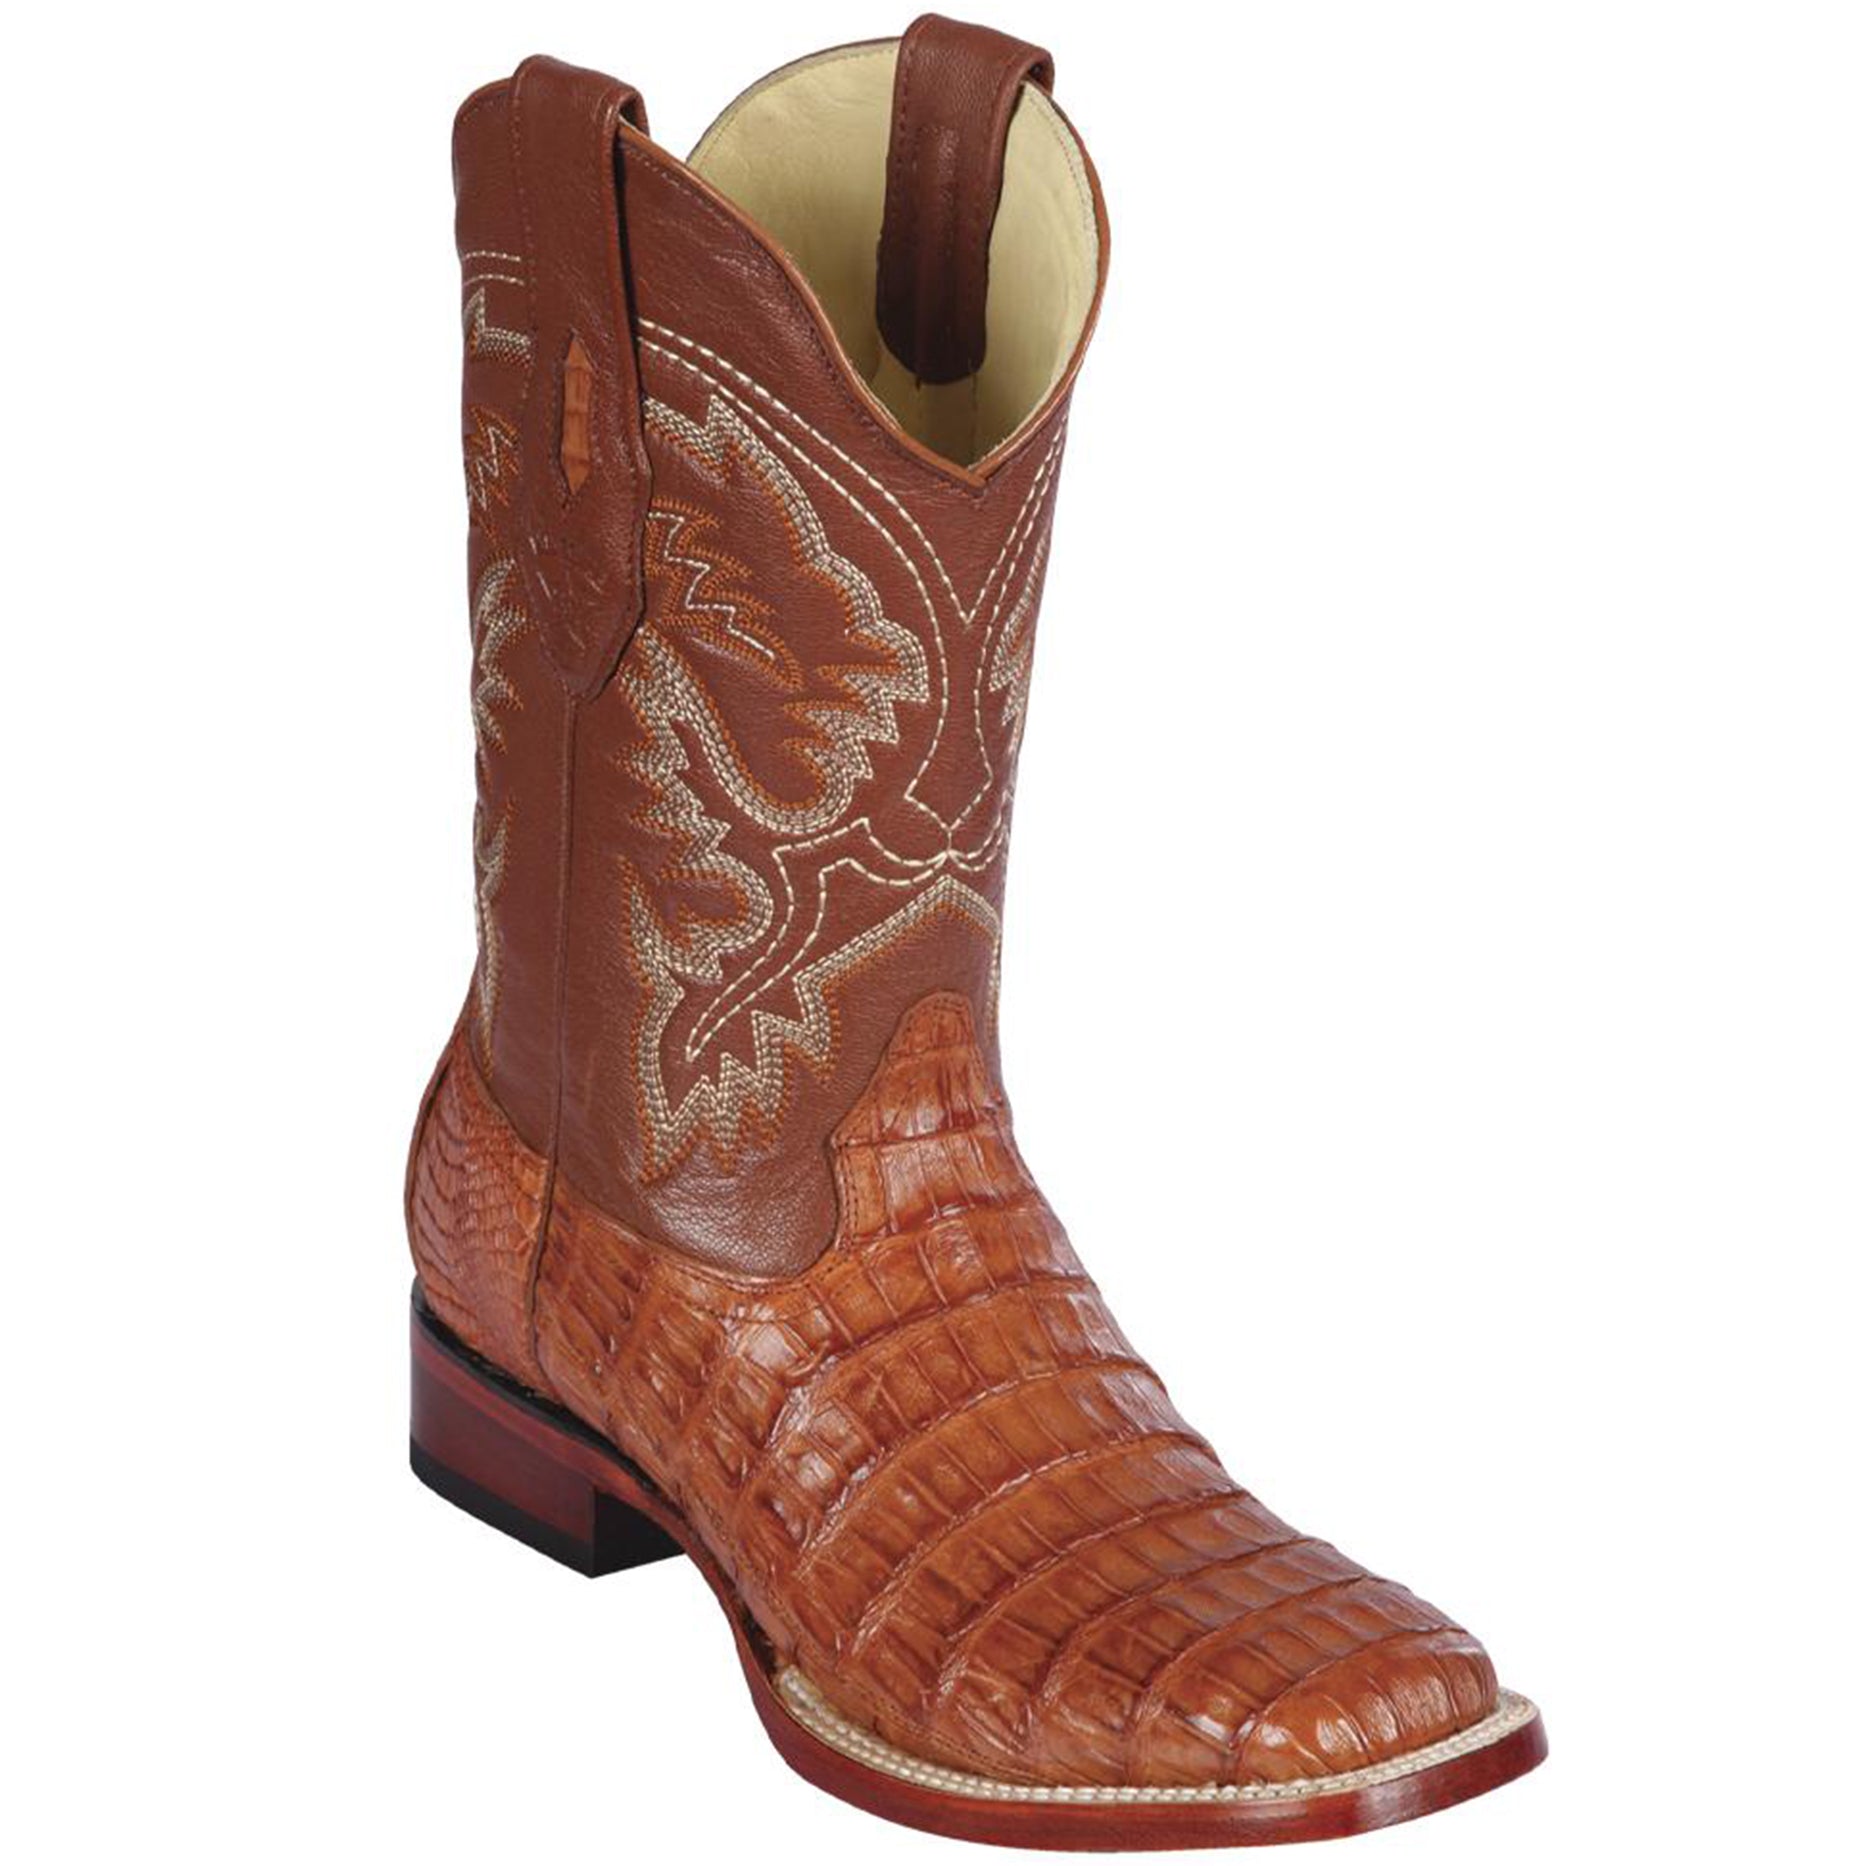 Caiman Square Toe Cognac Cowboy Boots by Los Altos Boots 